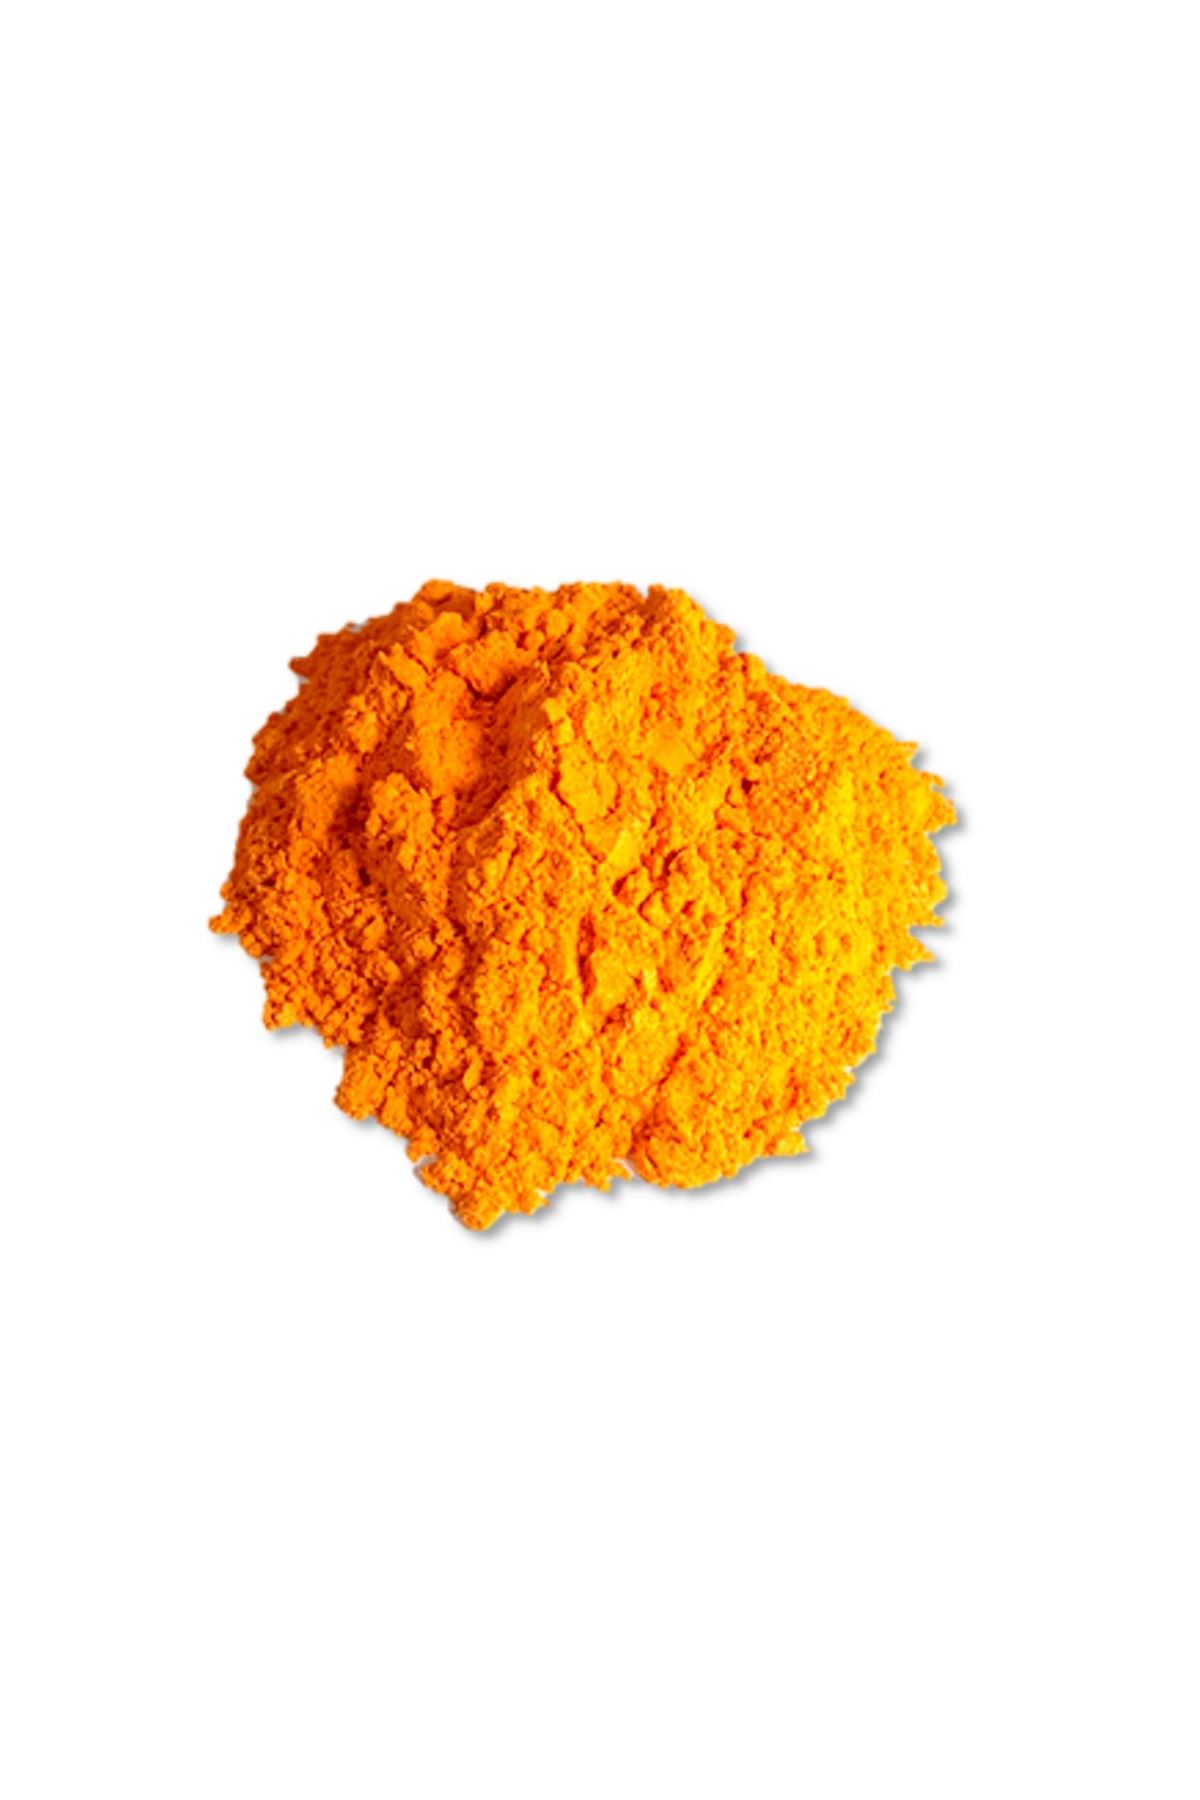 Brtr 10 Gr Orange Epoksi Metalik Toz Pigment (turuncu)